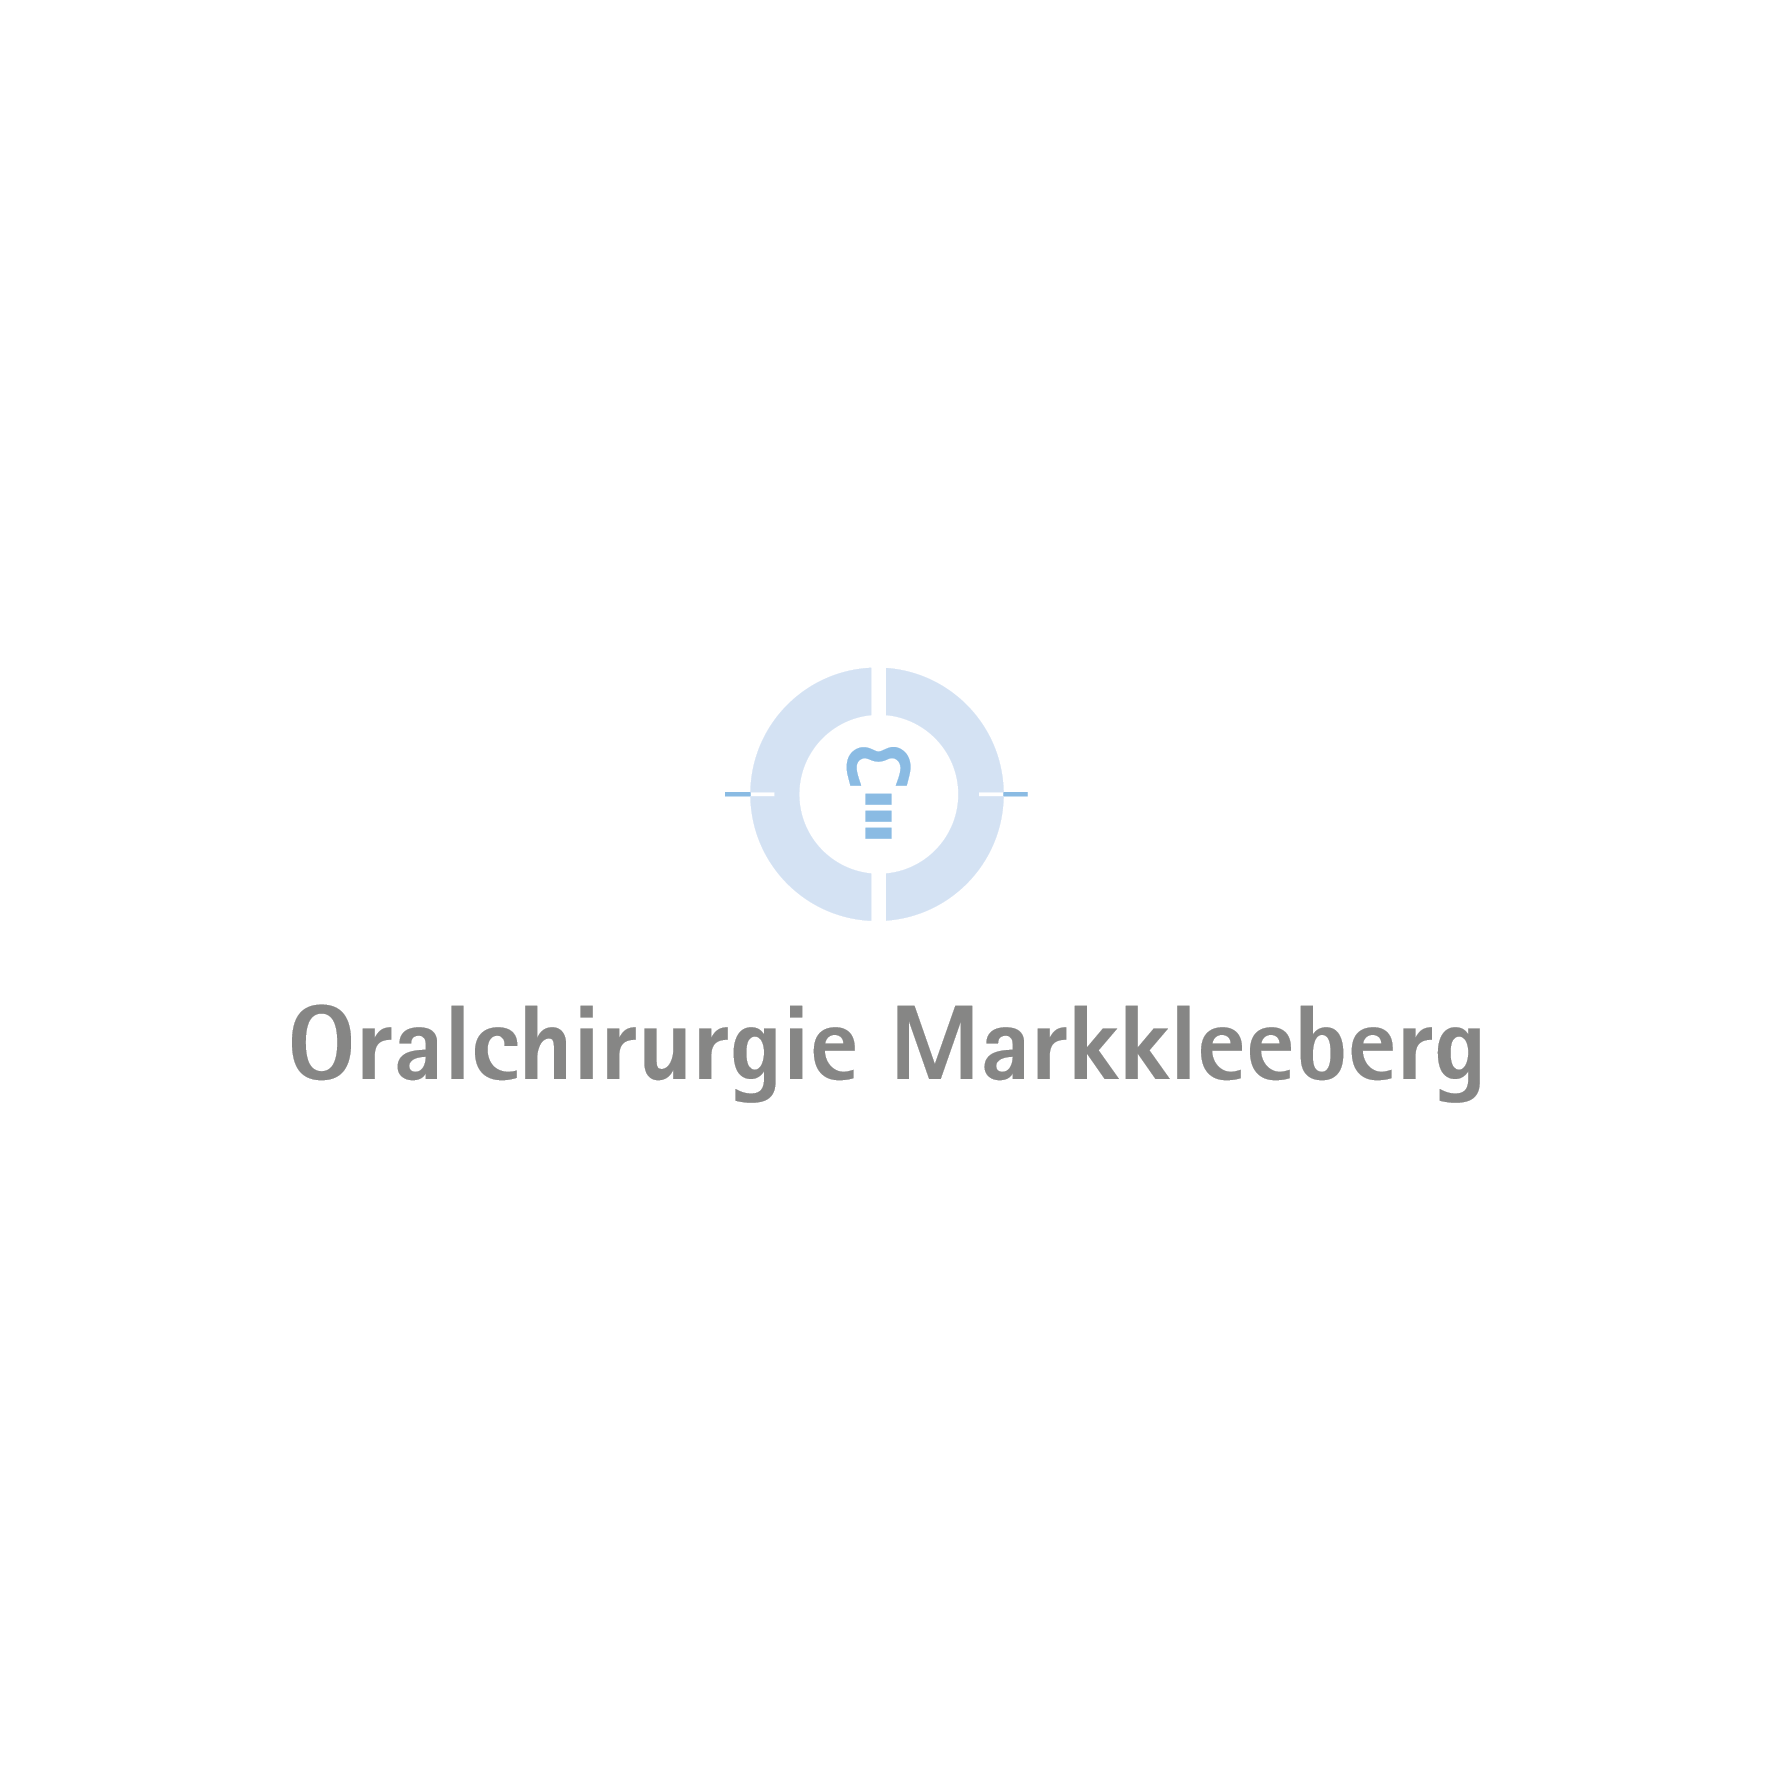 Oralchirurgie Markkleeberg Logo